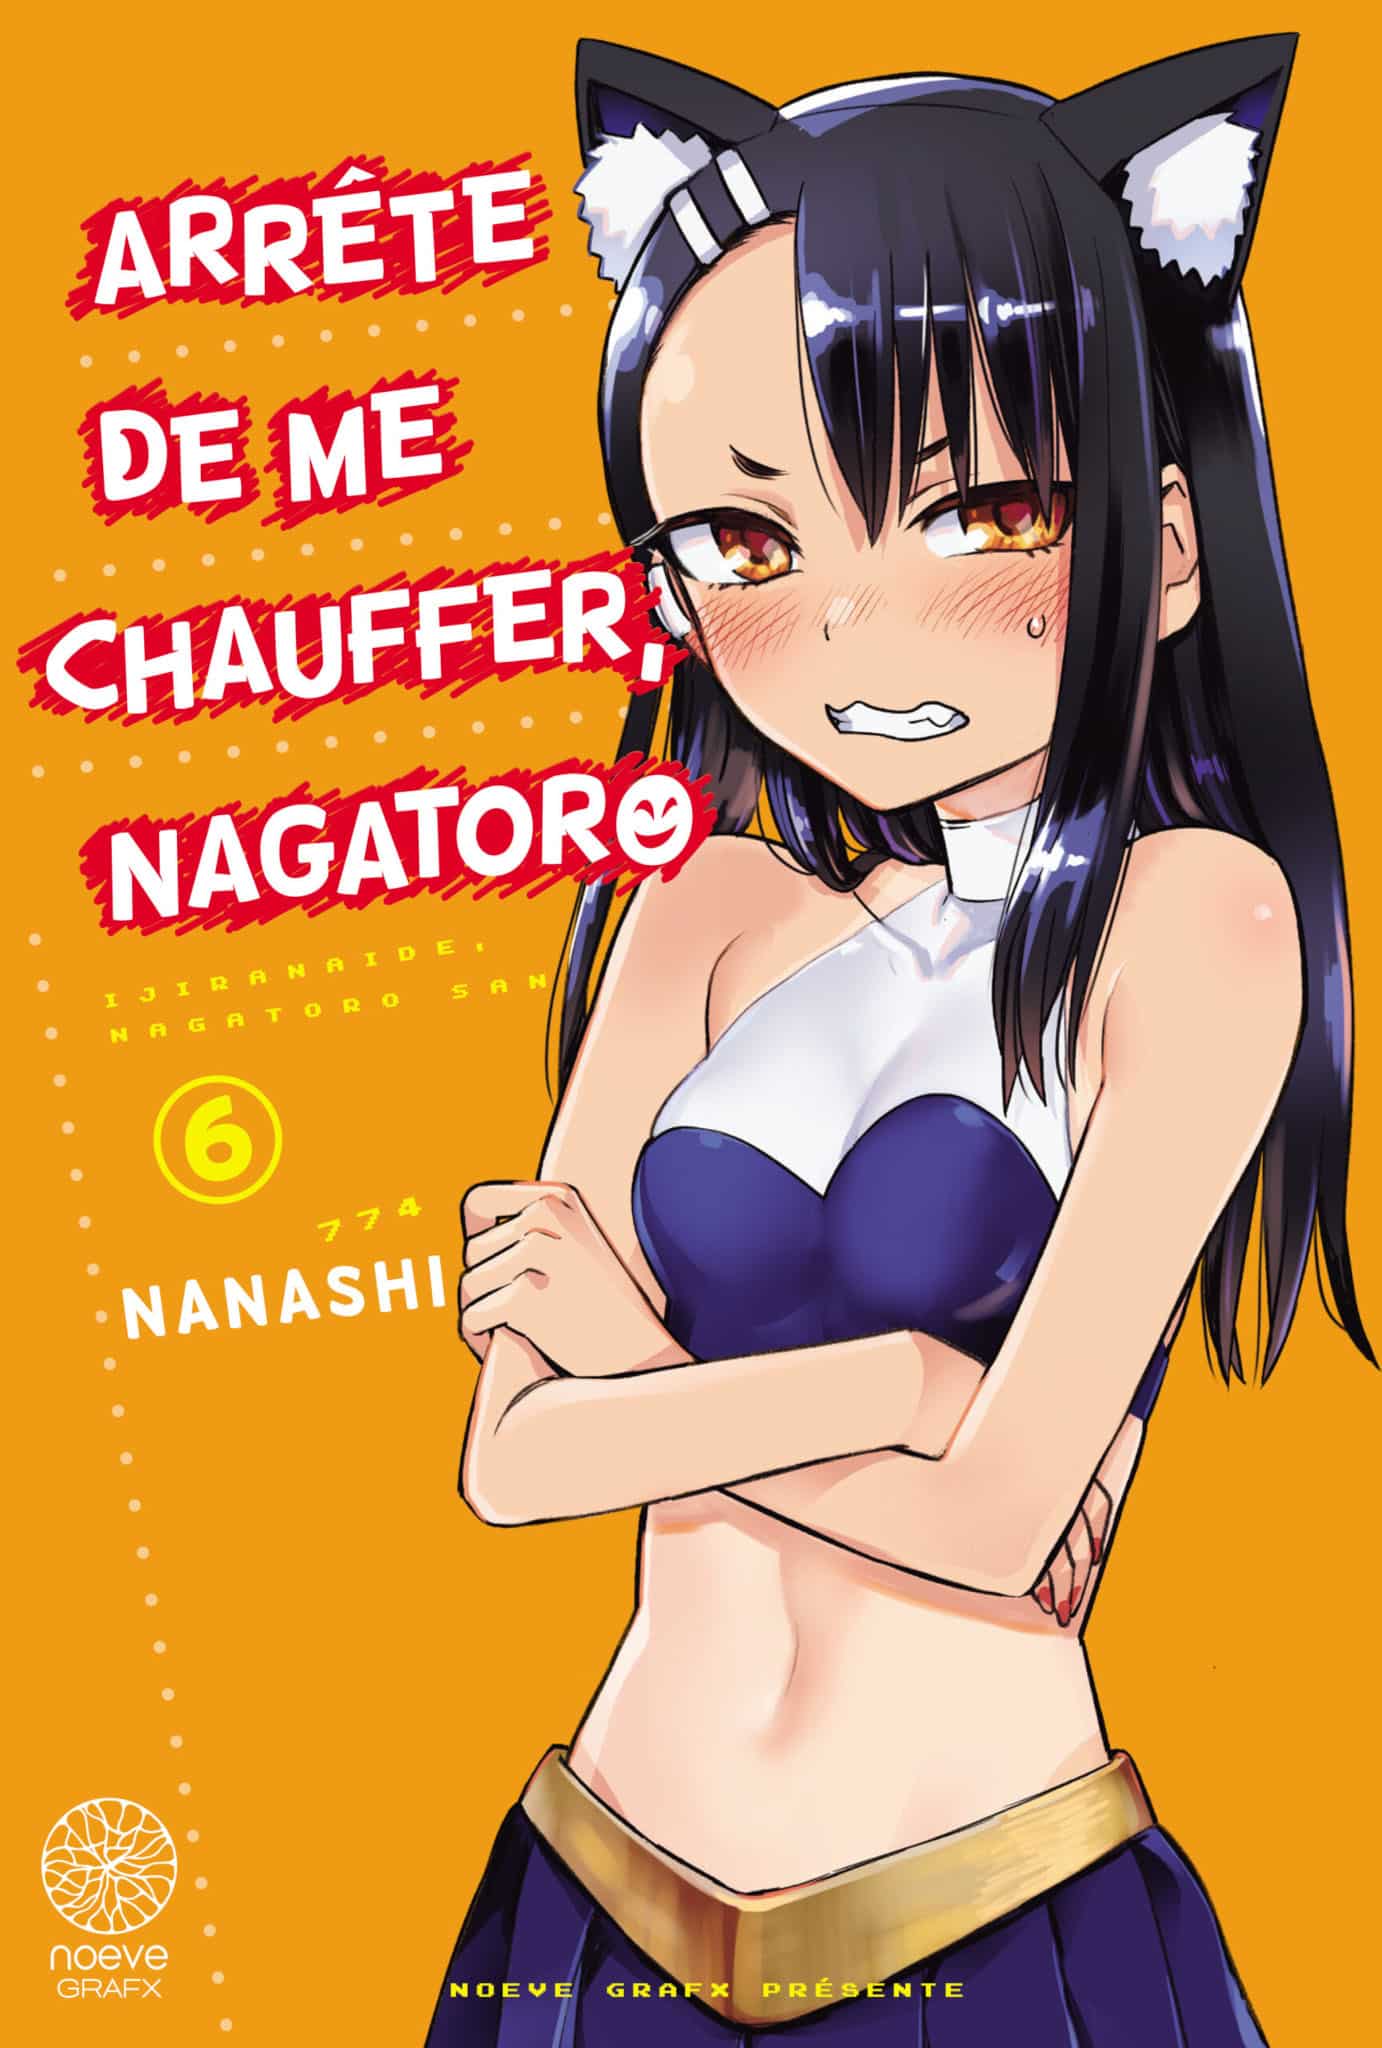 Tome 6 du manga Arrête de me chauffer, Nagatoro.